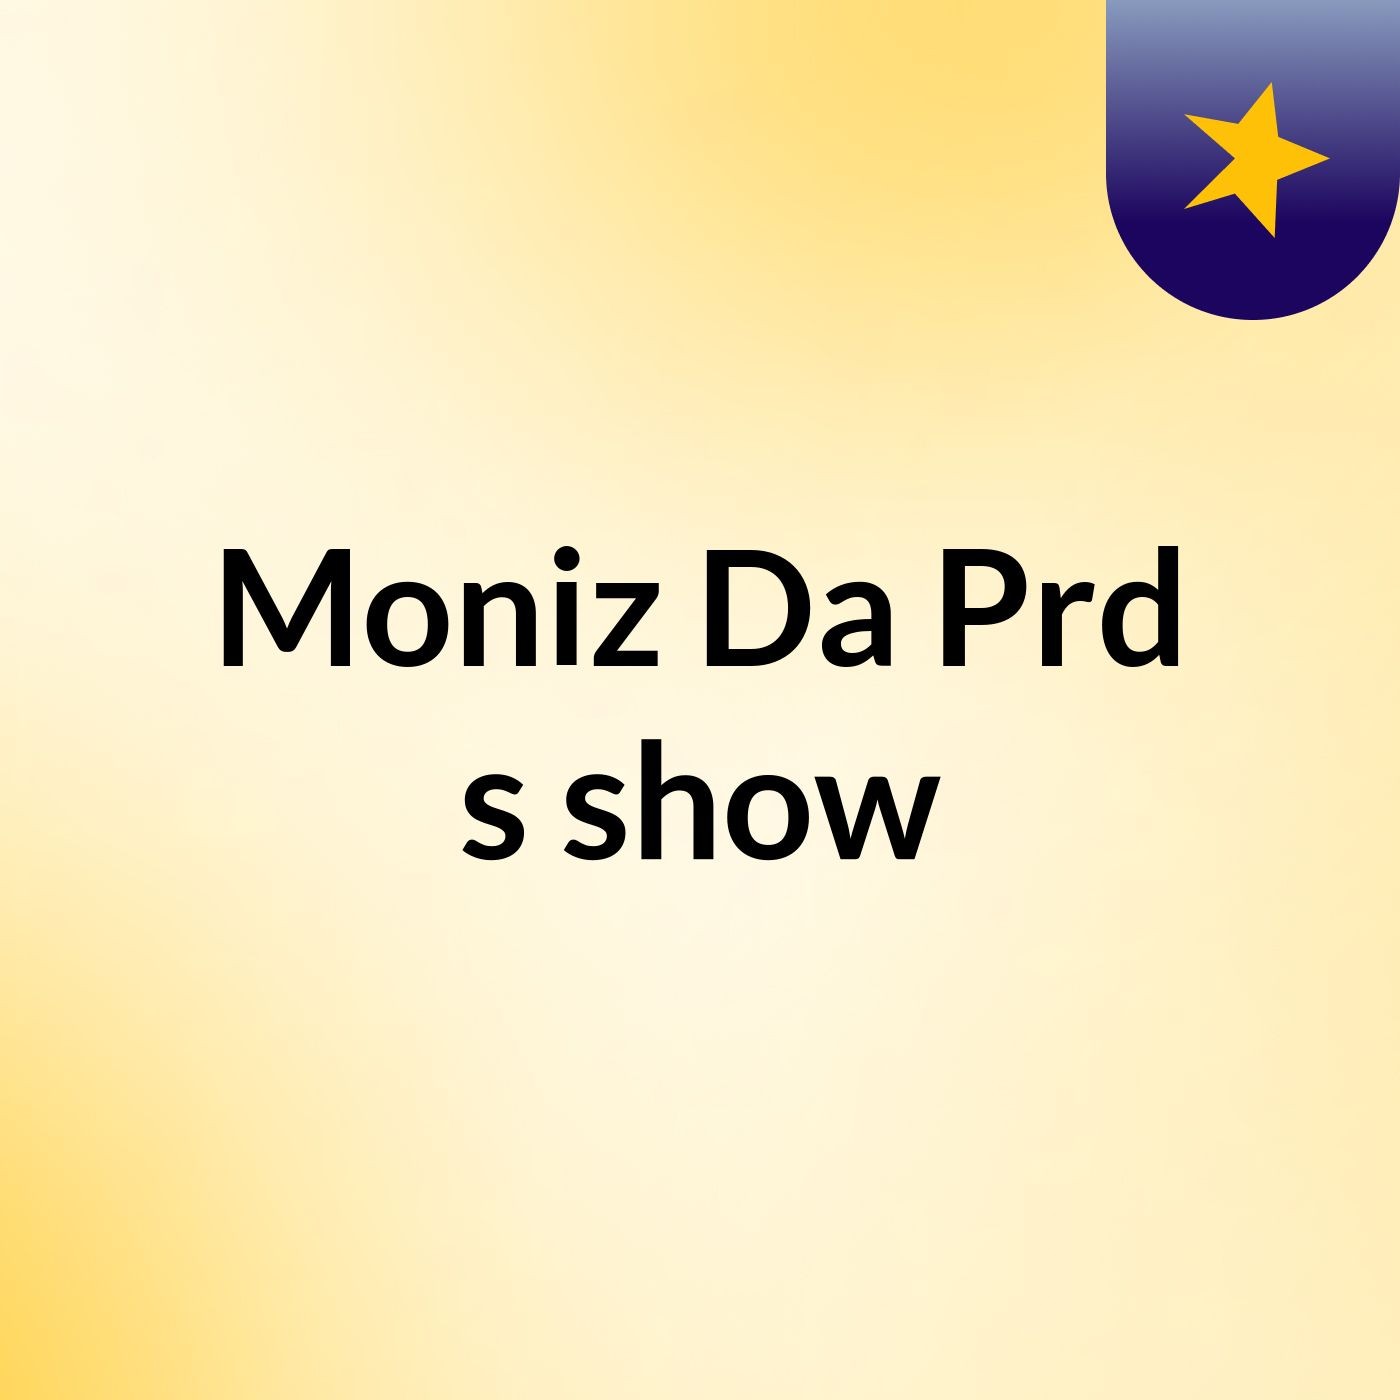 Moniz Da Prd's show